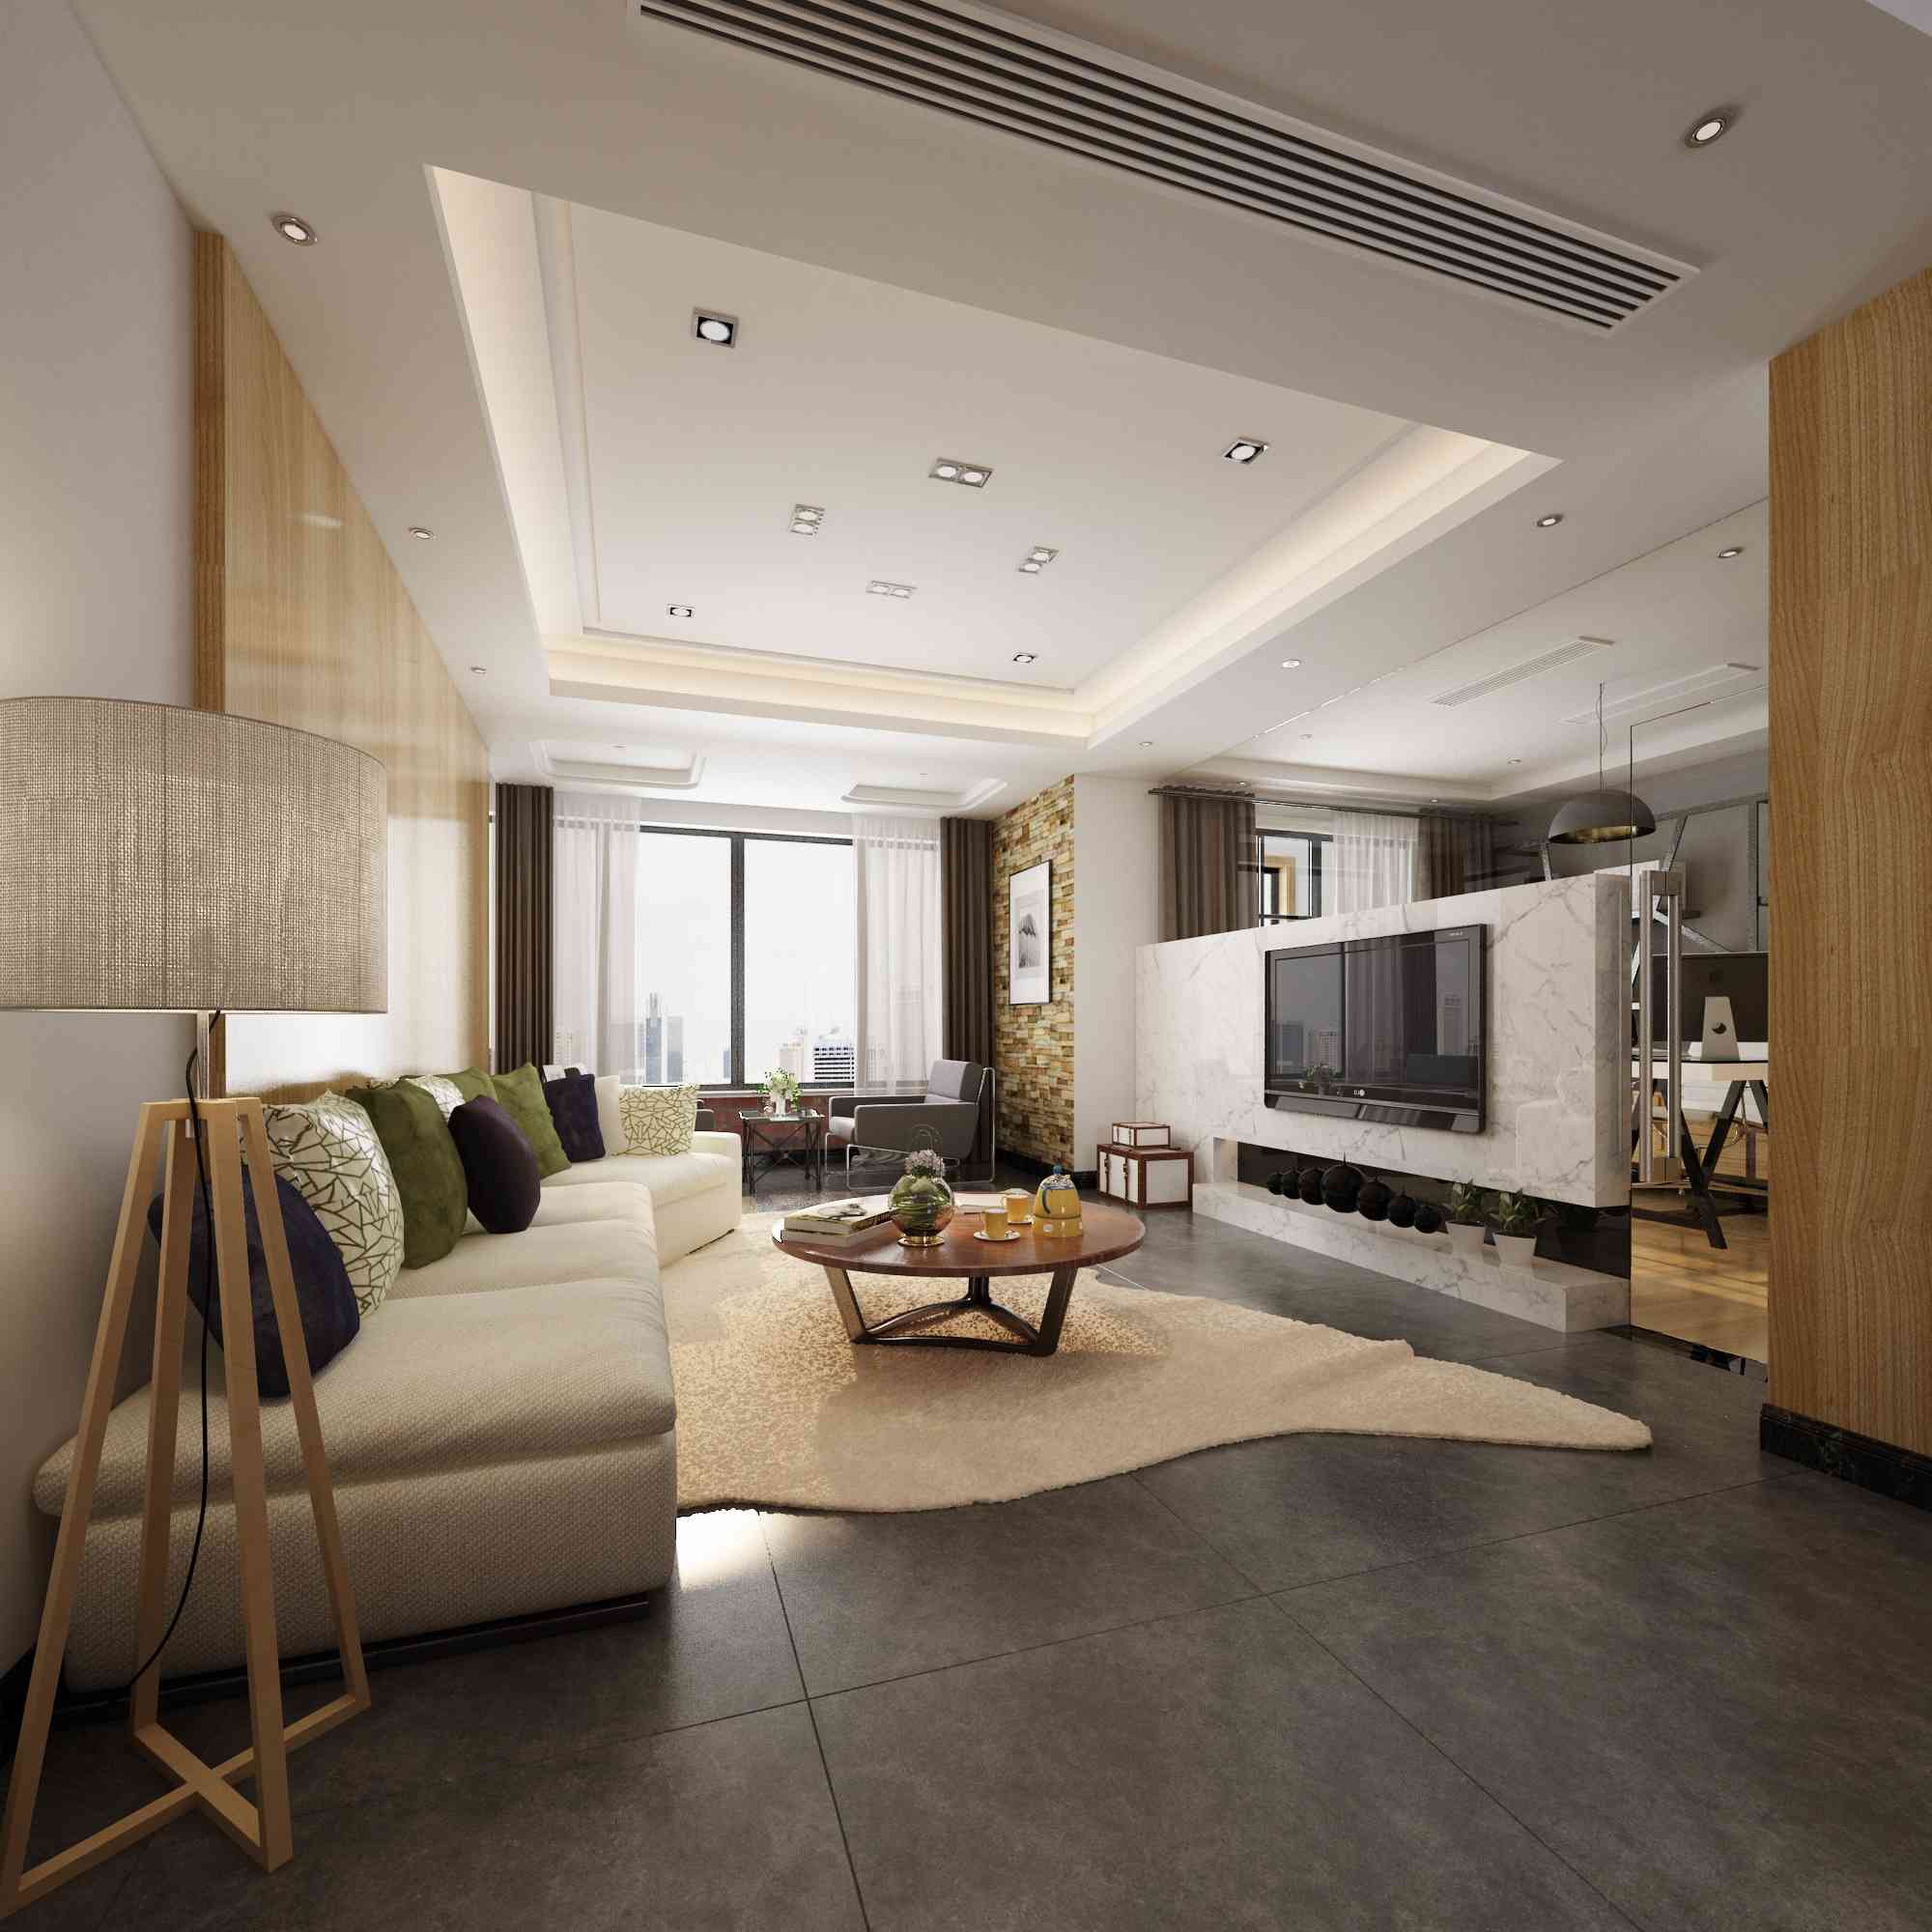 Contemporary Beige Living Room Design With TV Unit